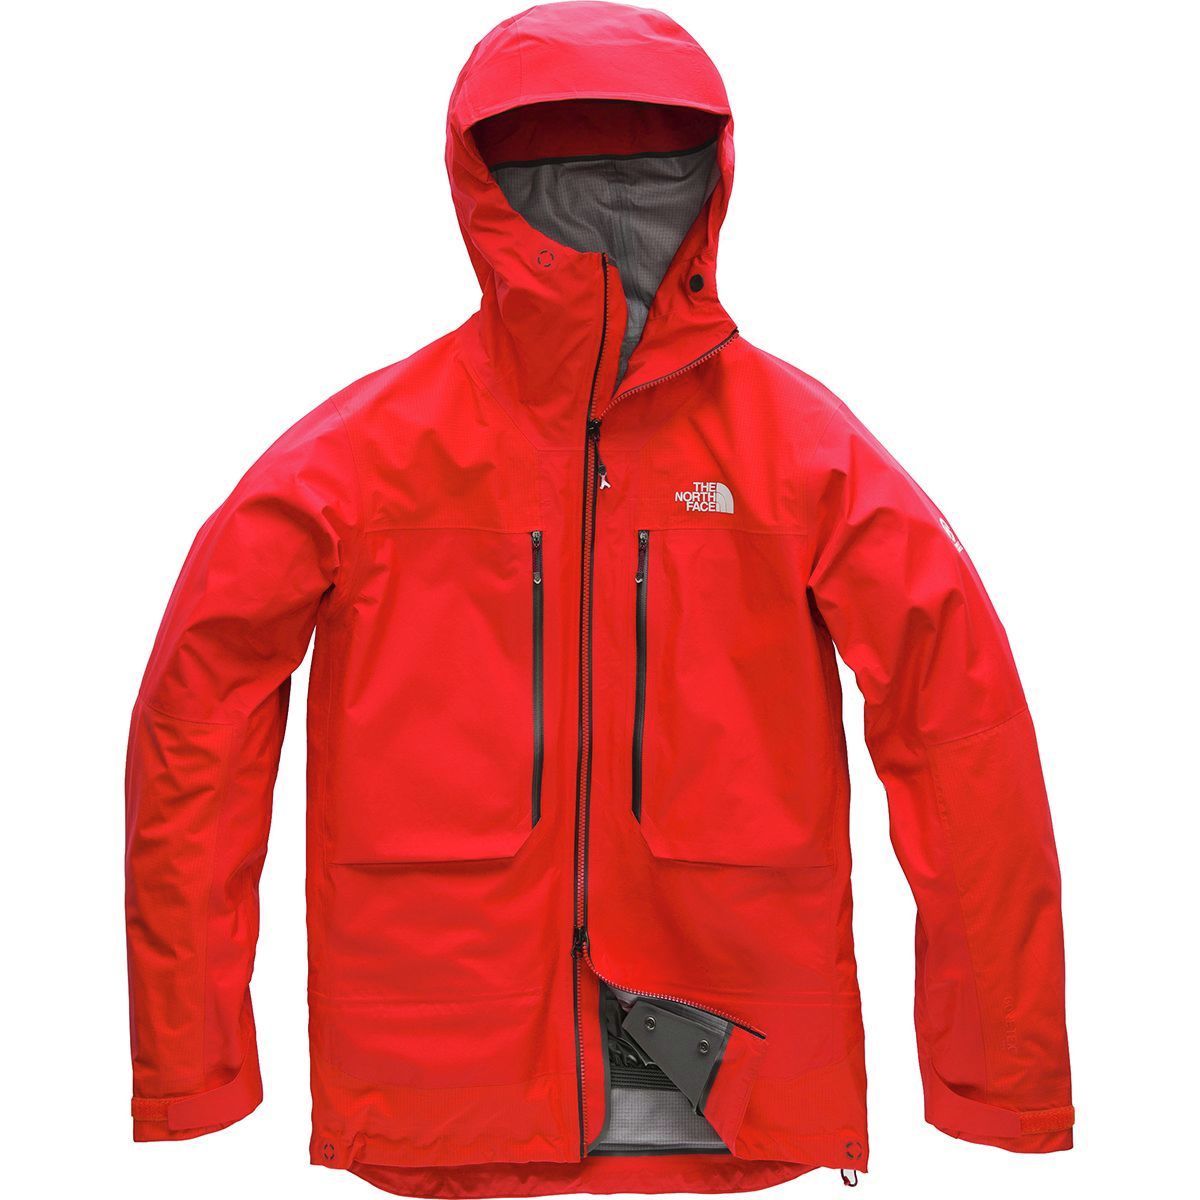 Weven evalueren Uitbreiden The North Face Summit L5 GTX Pro Jacket - Men's - Clothing